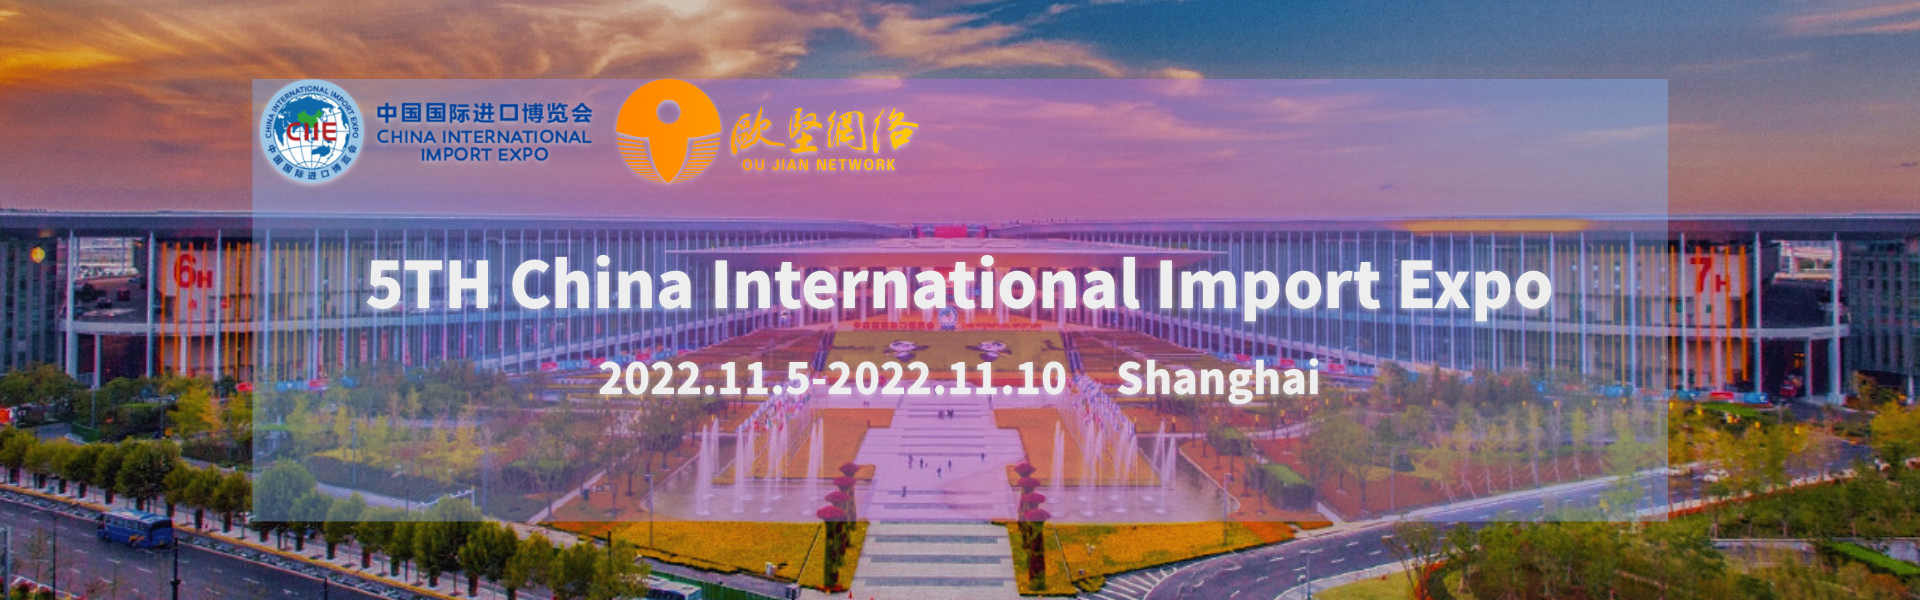 I-China International Import Expo